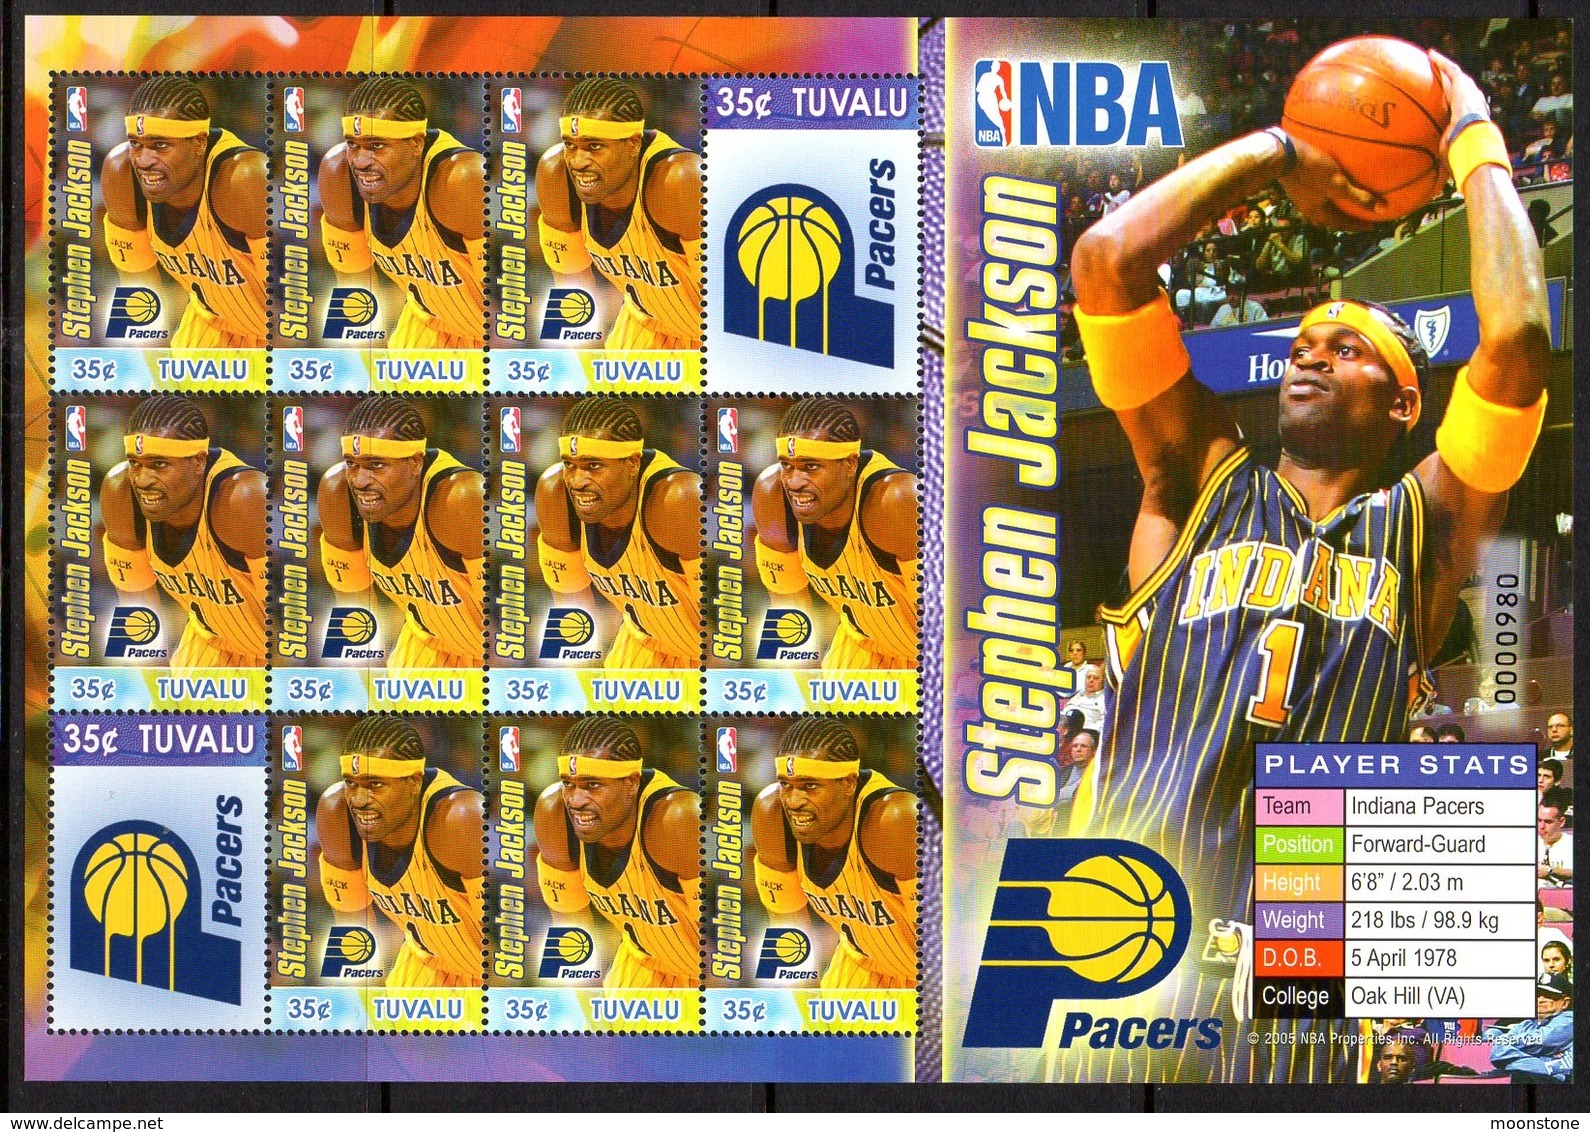 Tuvalu 2006 Basketball NBA Players Detroit Pistons Sheetlet, MNH, SG 1196a (BP2) - Tuvalu